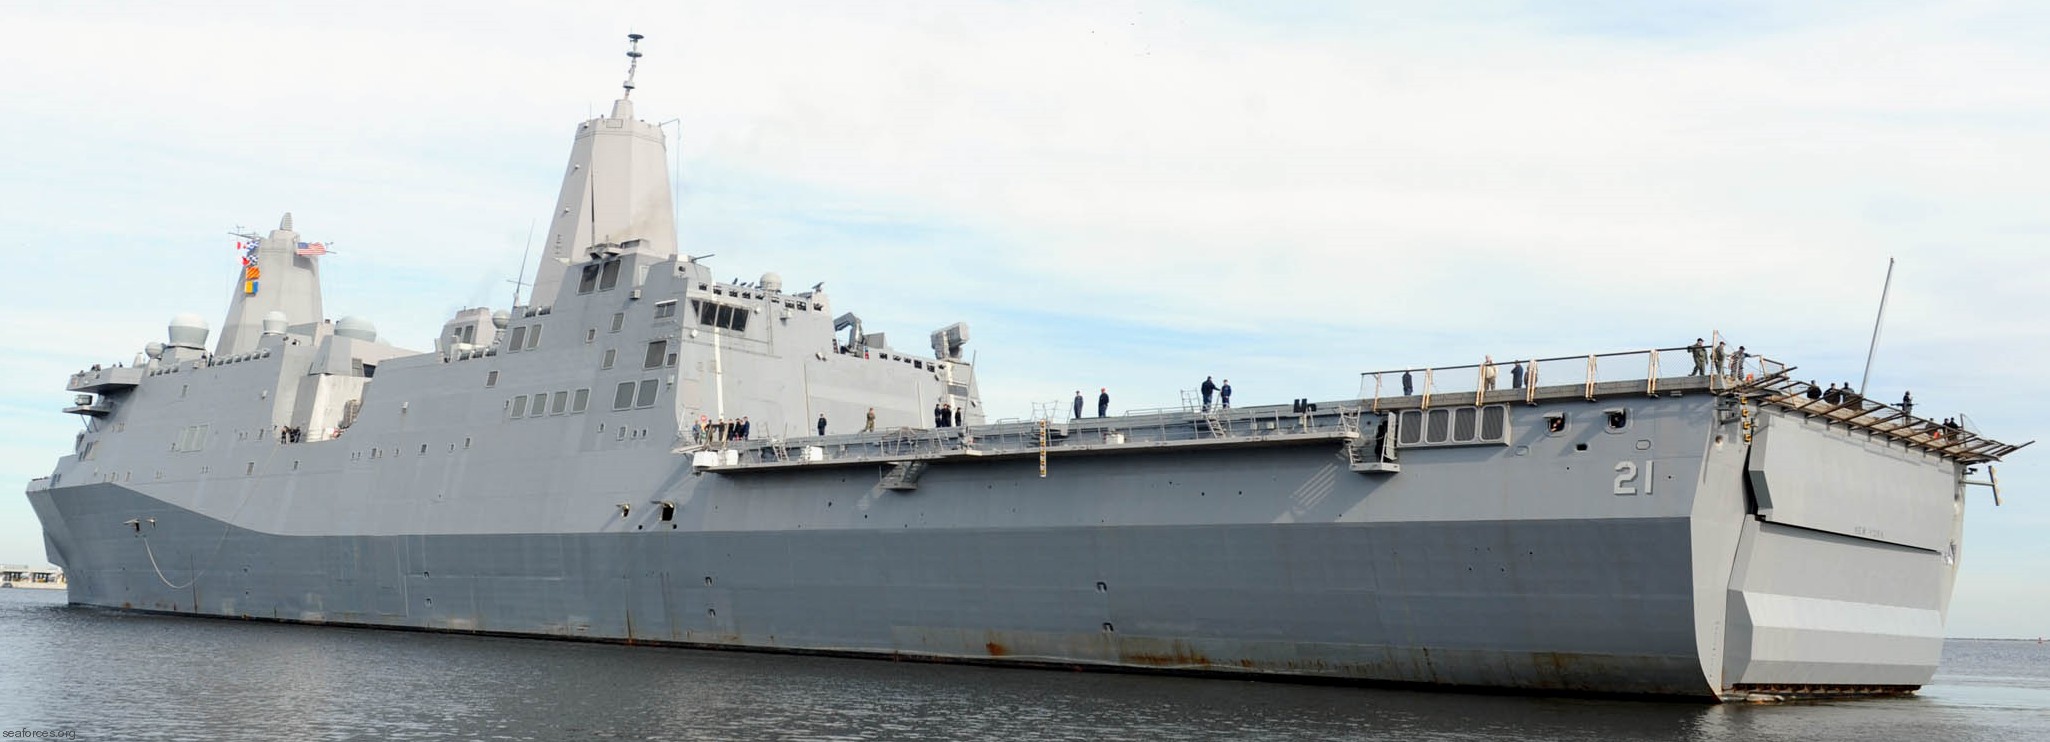 lpd-21 uss new york san antonio class amphibious transport dock ship navy 32 mayport